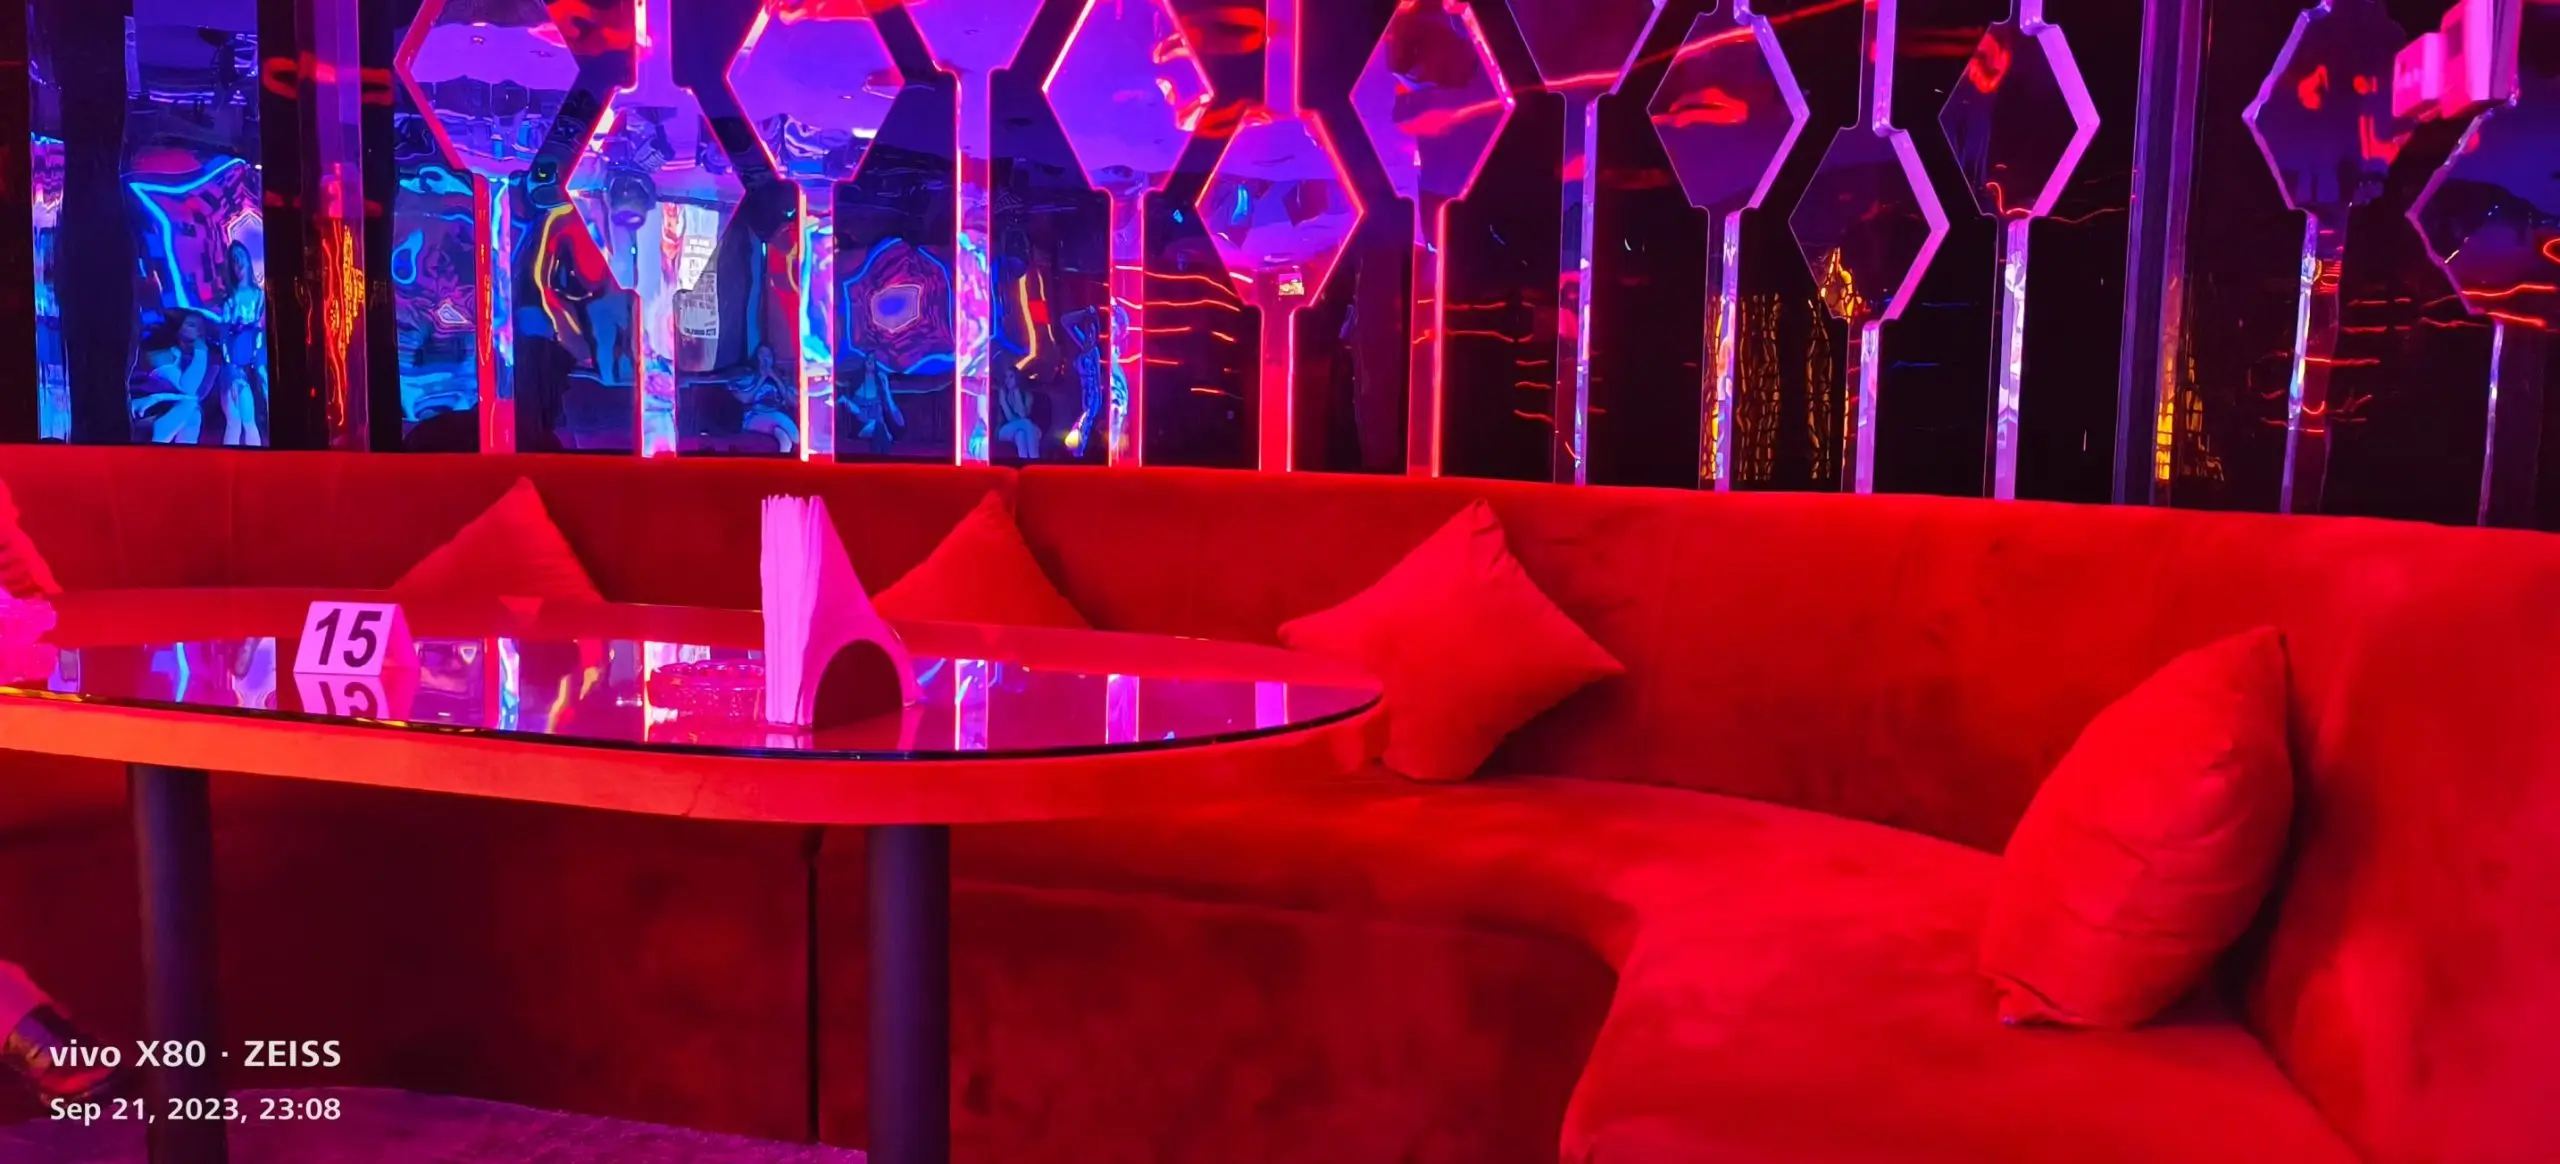 Indian night club hotels in Dubai